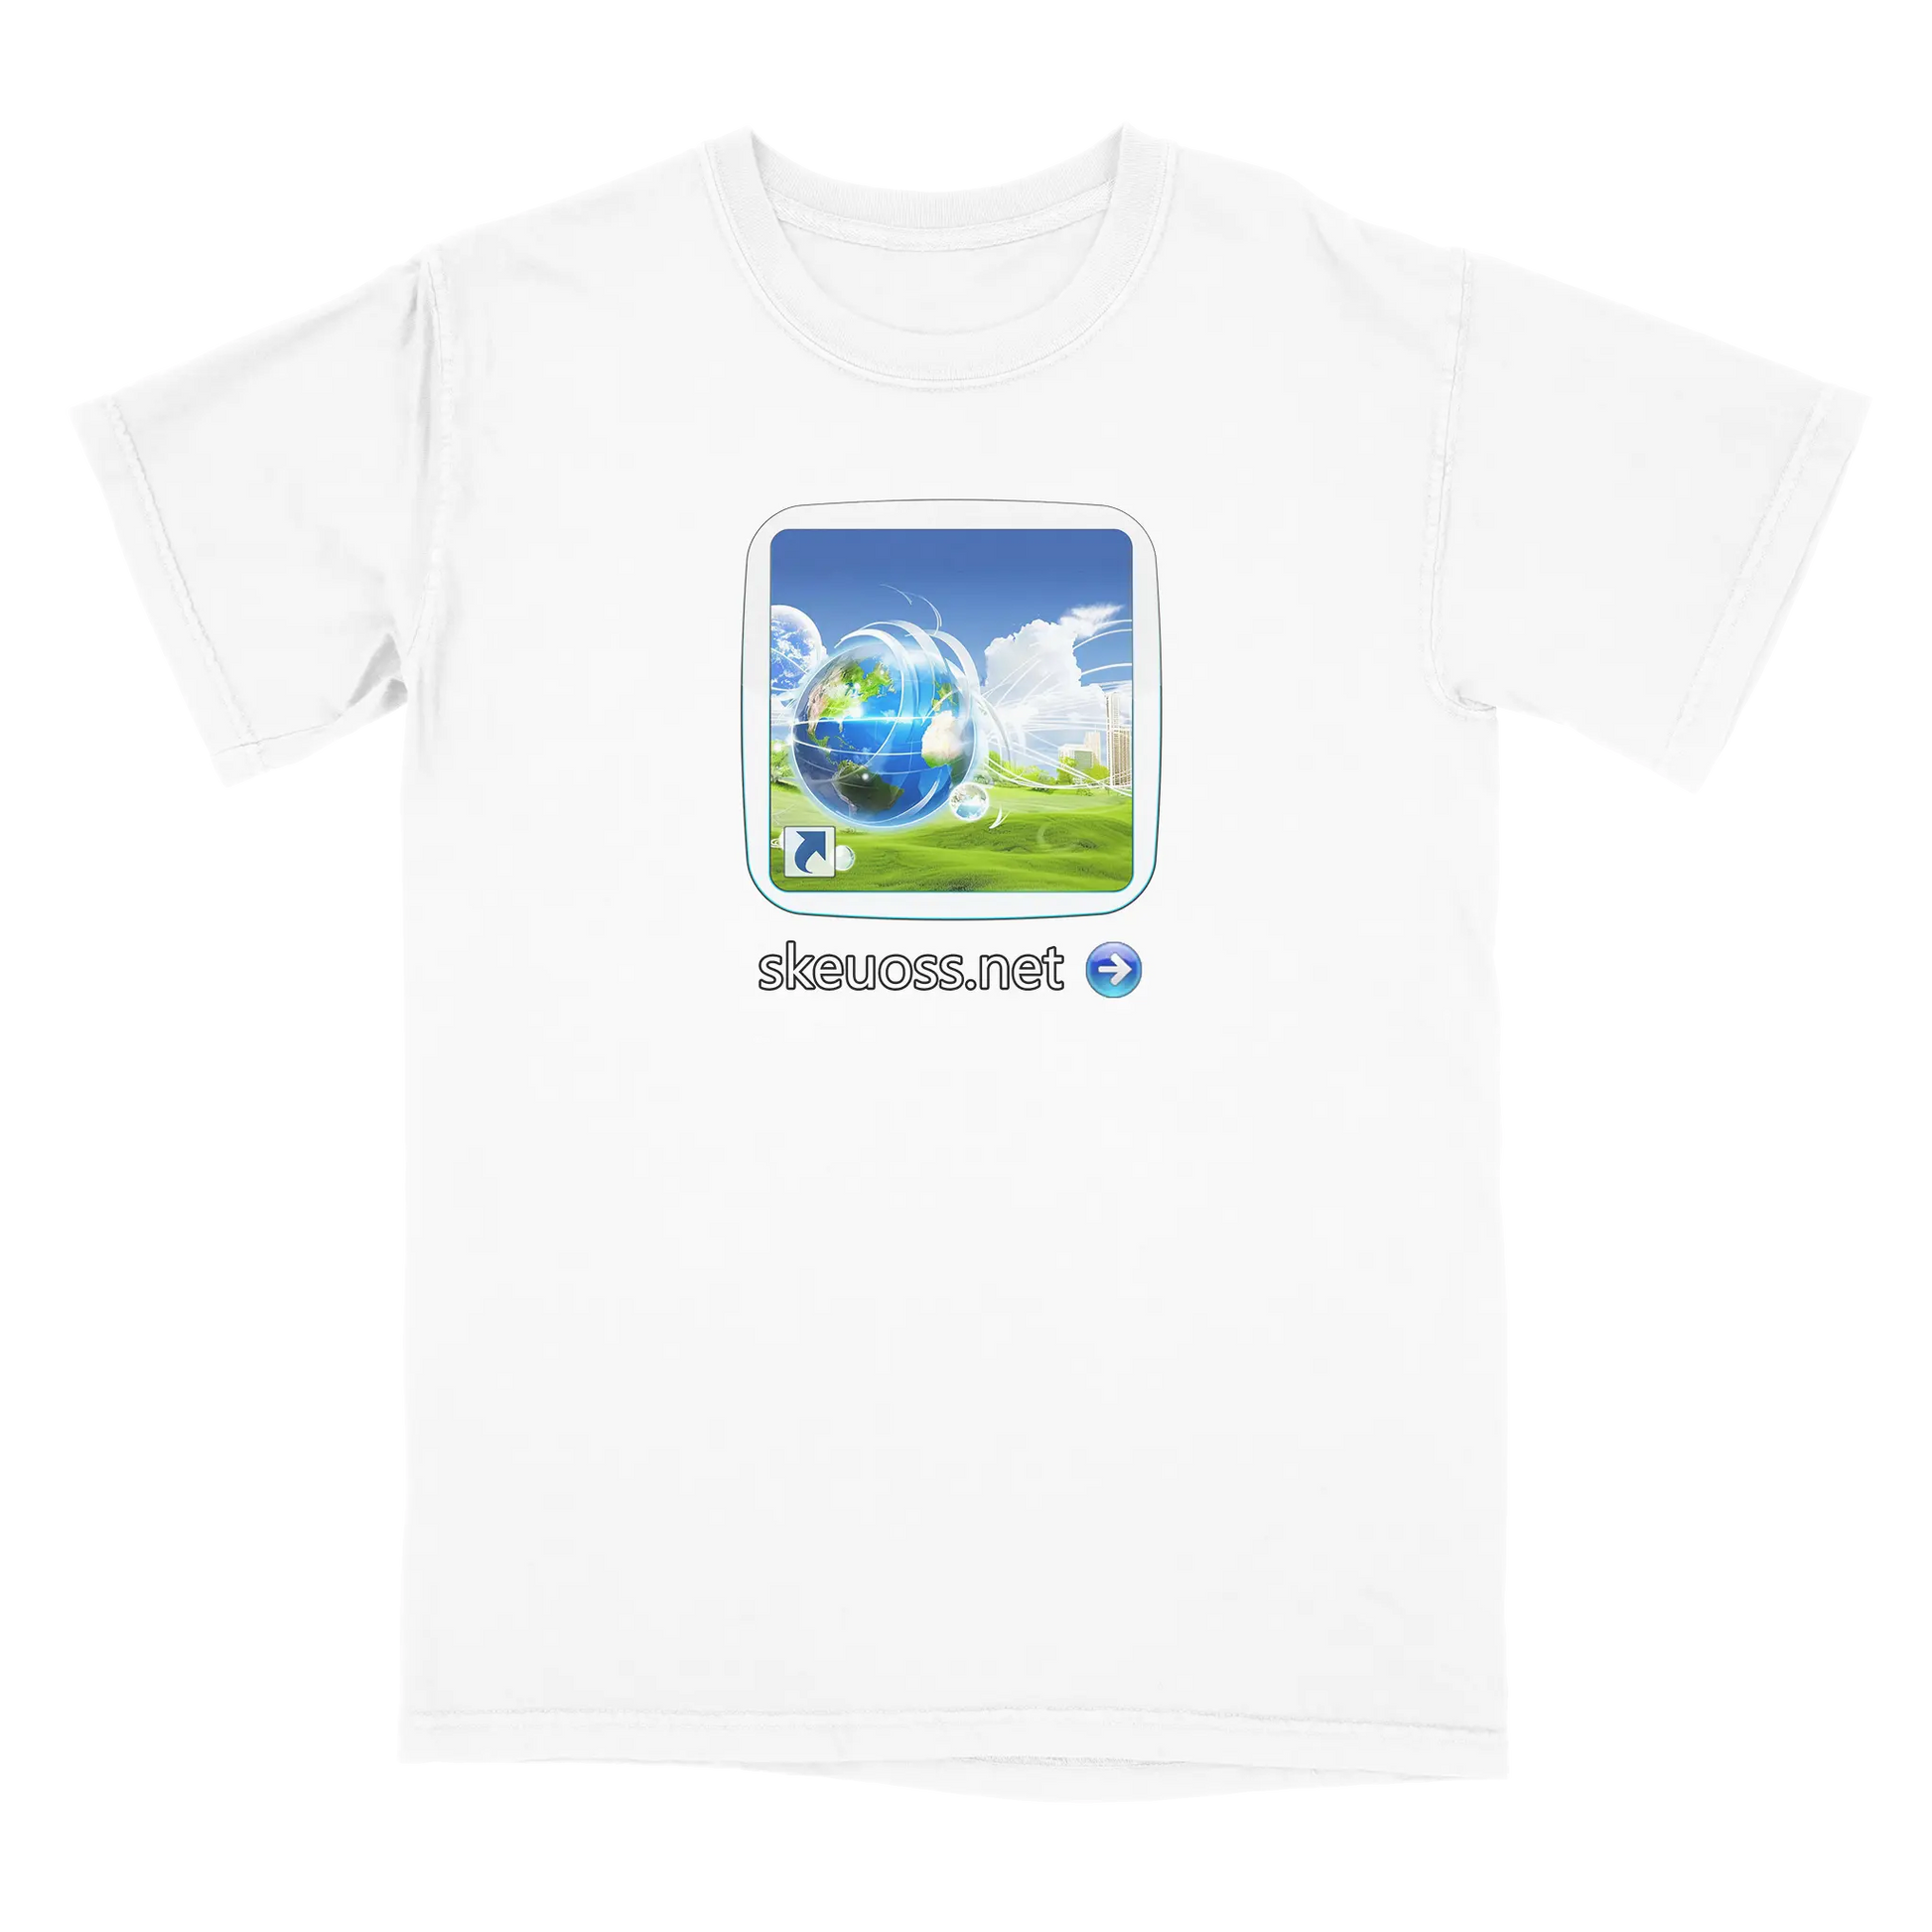 Frutiger Aero T-shirt - User Login Collection - User 328